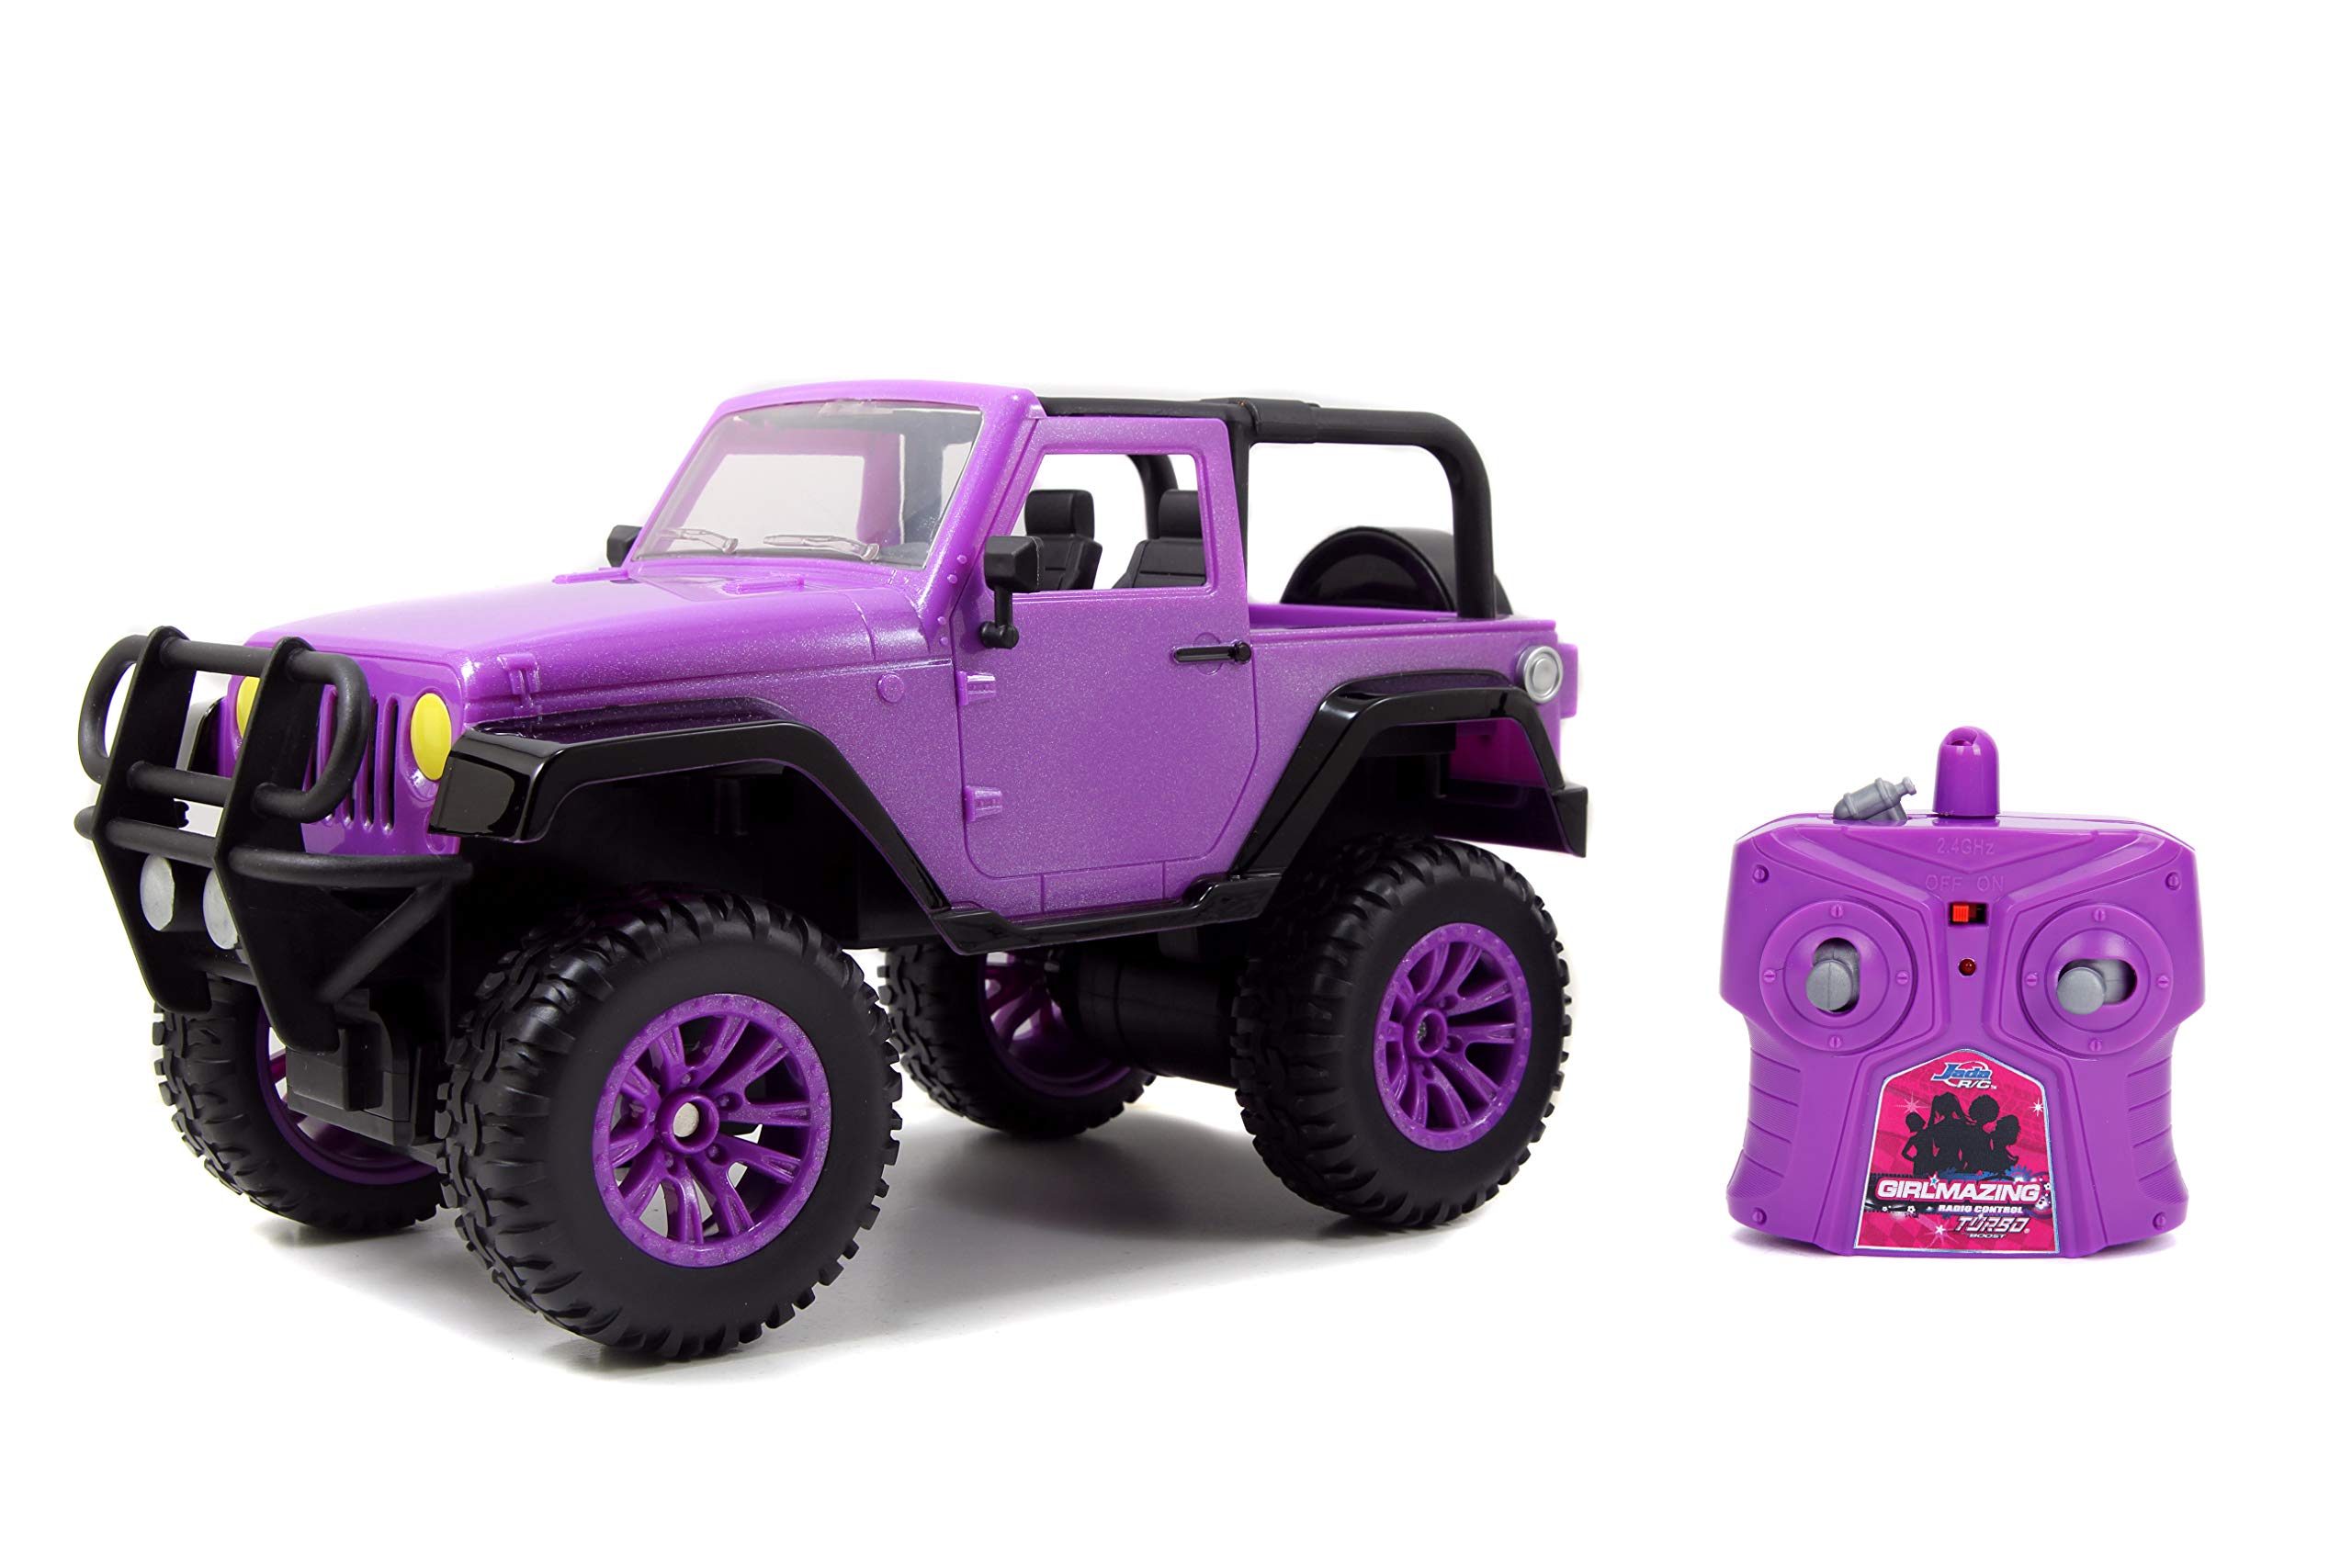 Jada Toys GIRLMAZING Jeep R/C Vehicle (1:16 Scale), Purple